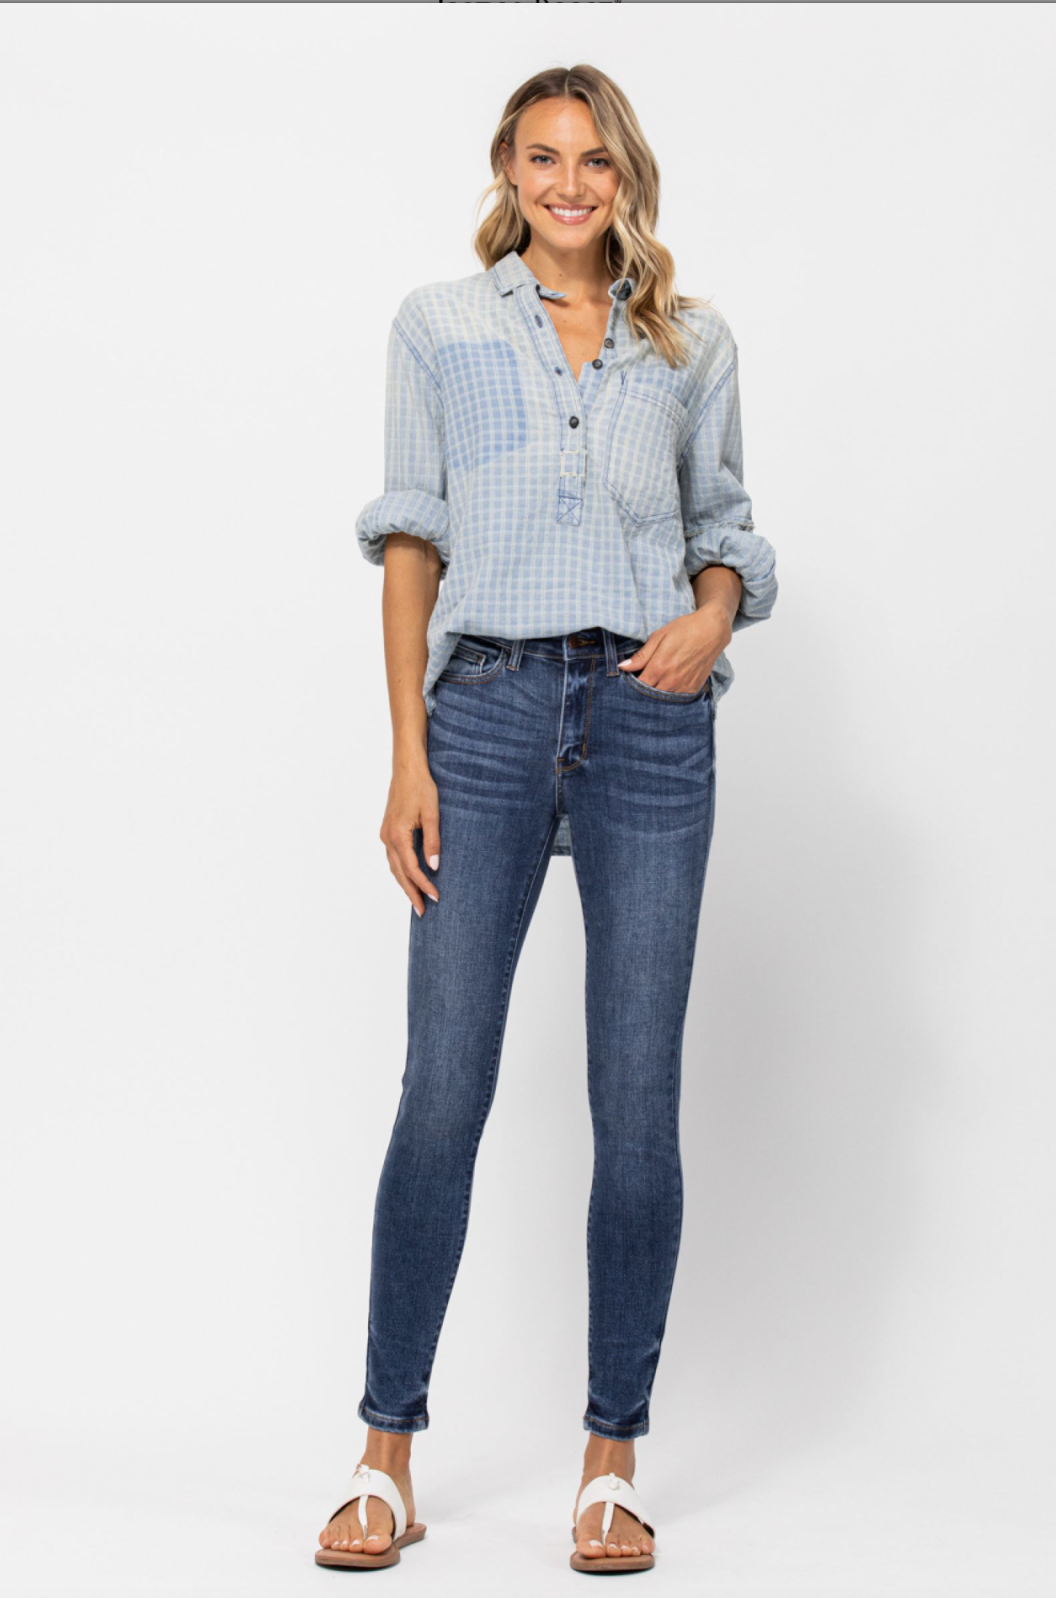 Judy Blue Handsand Skinny Fit Jeans - Medium Wash